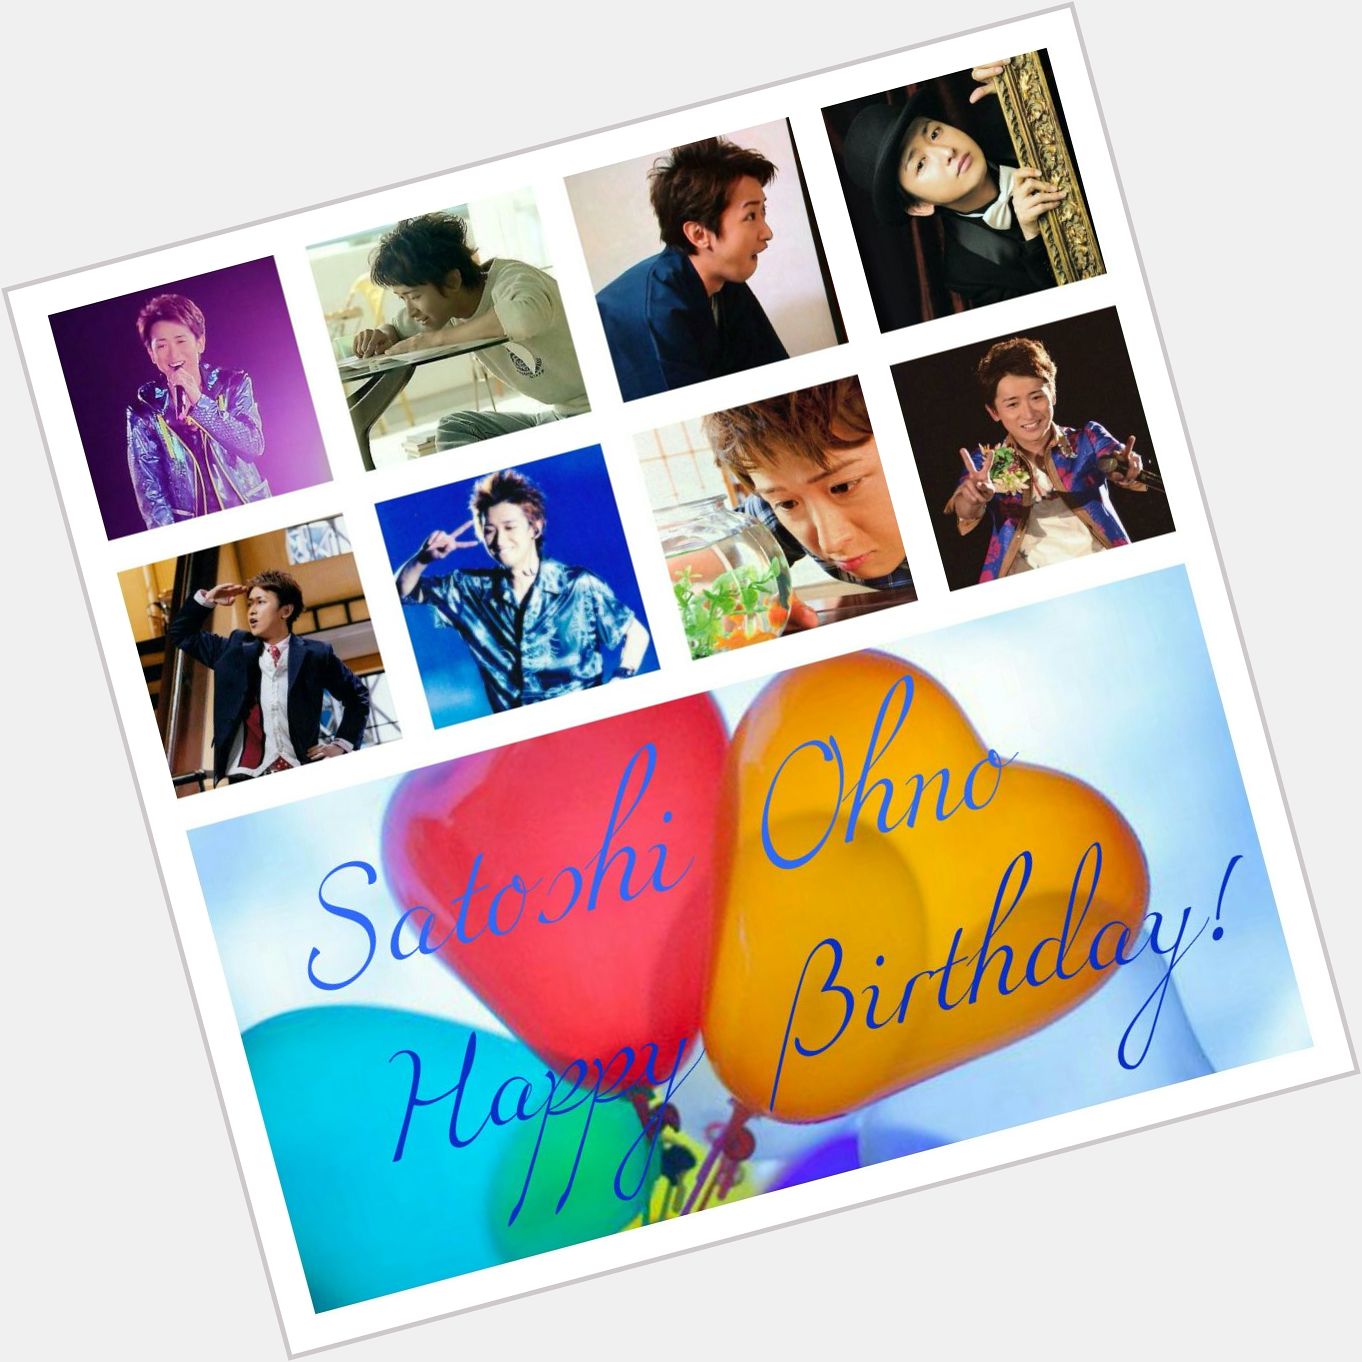 Satoshi Ohno
Happy Birthday!!!!! 